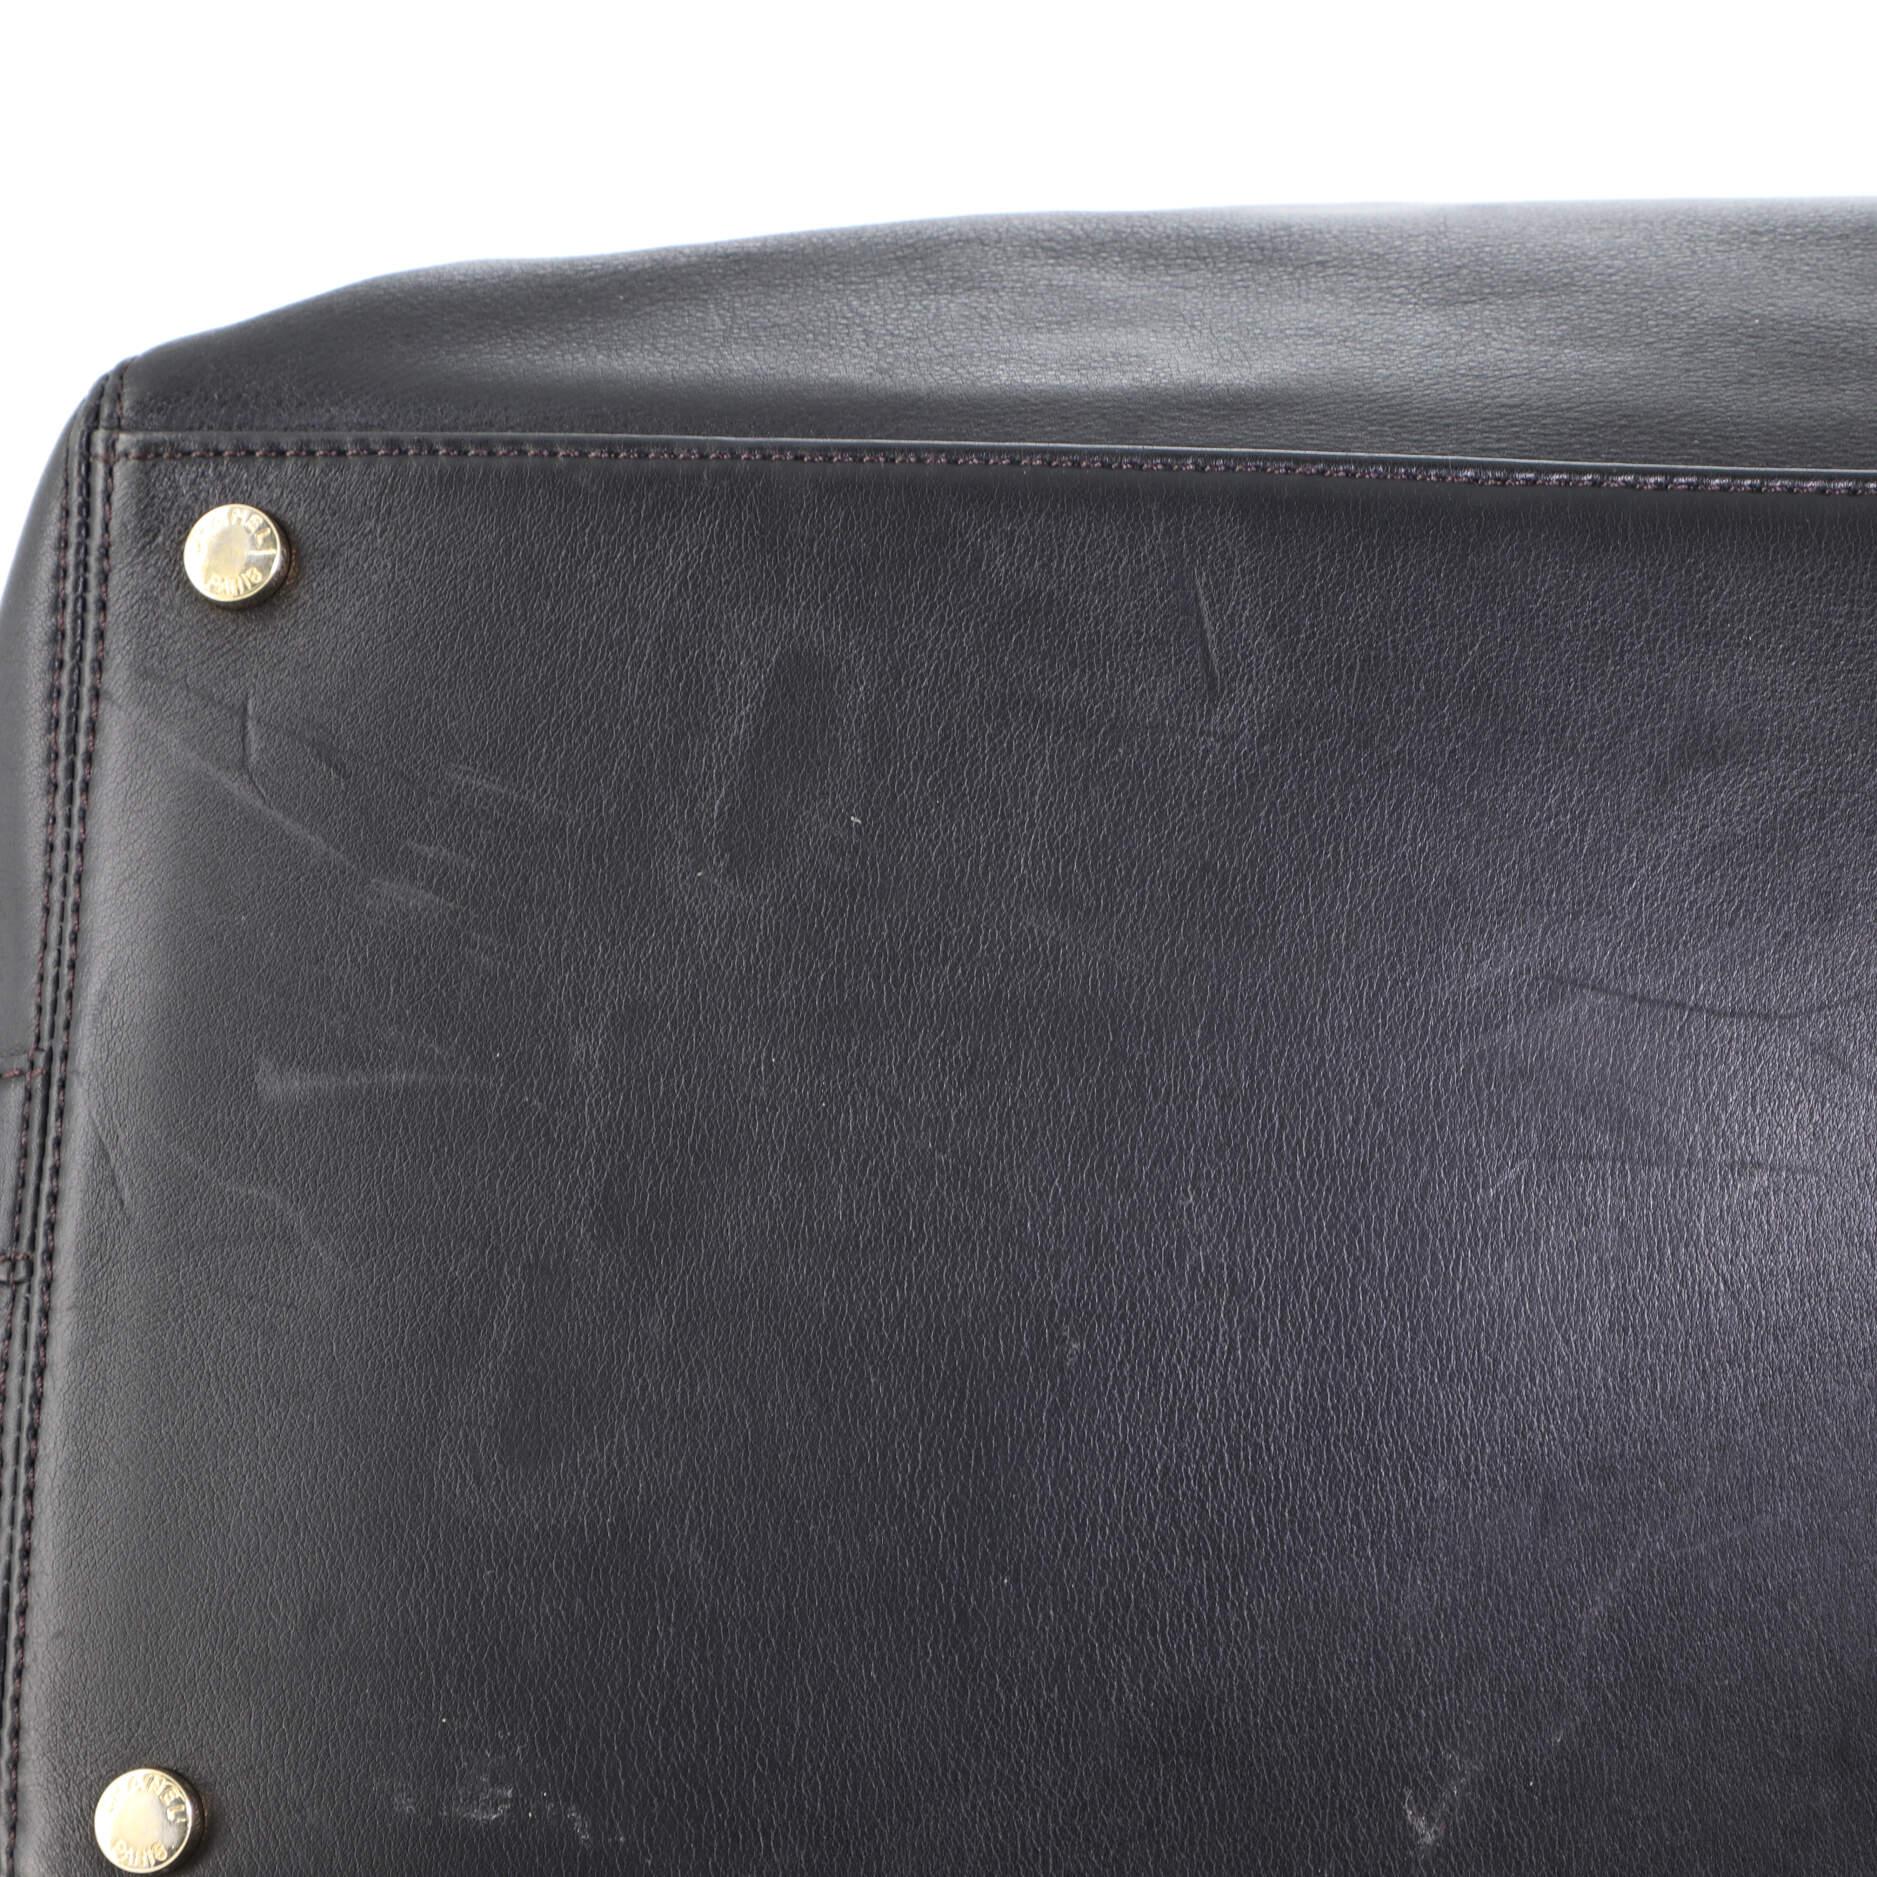 Women's or Men's Chanel Vintage Convertible Weekender Bag Leather Large